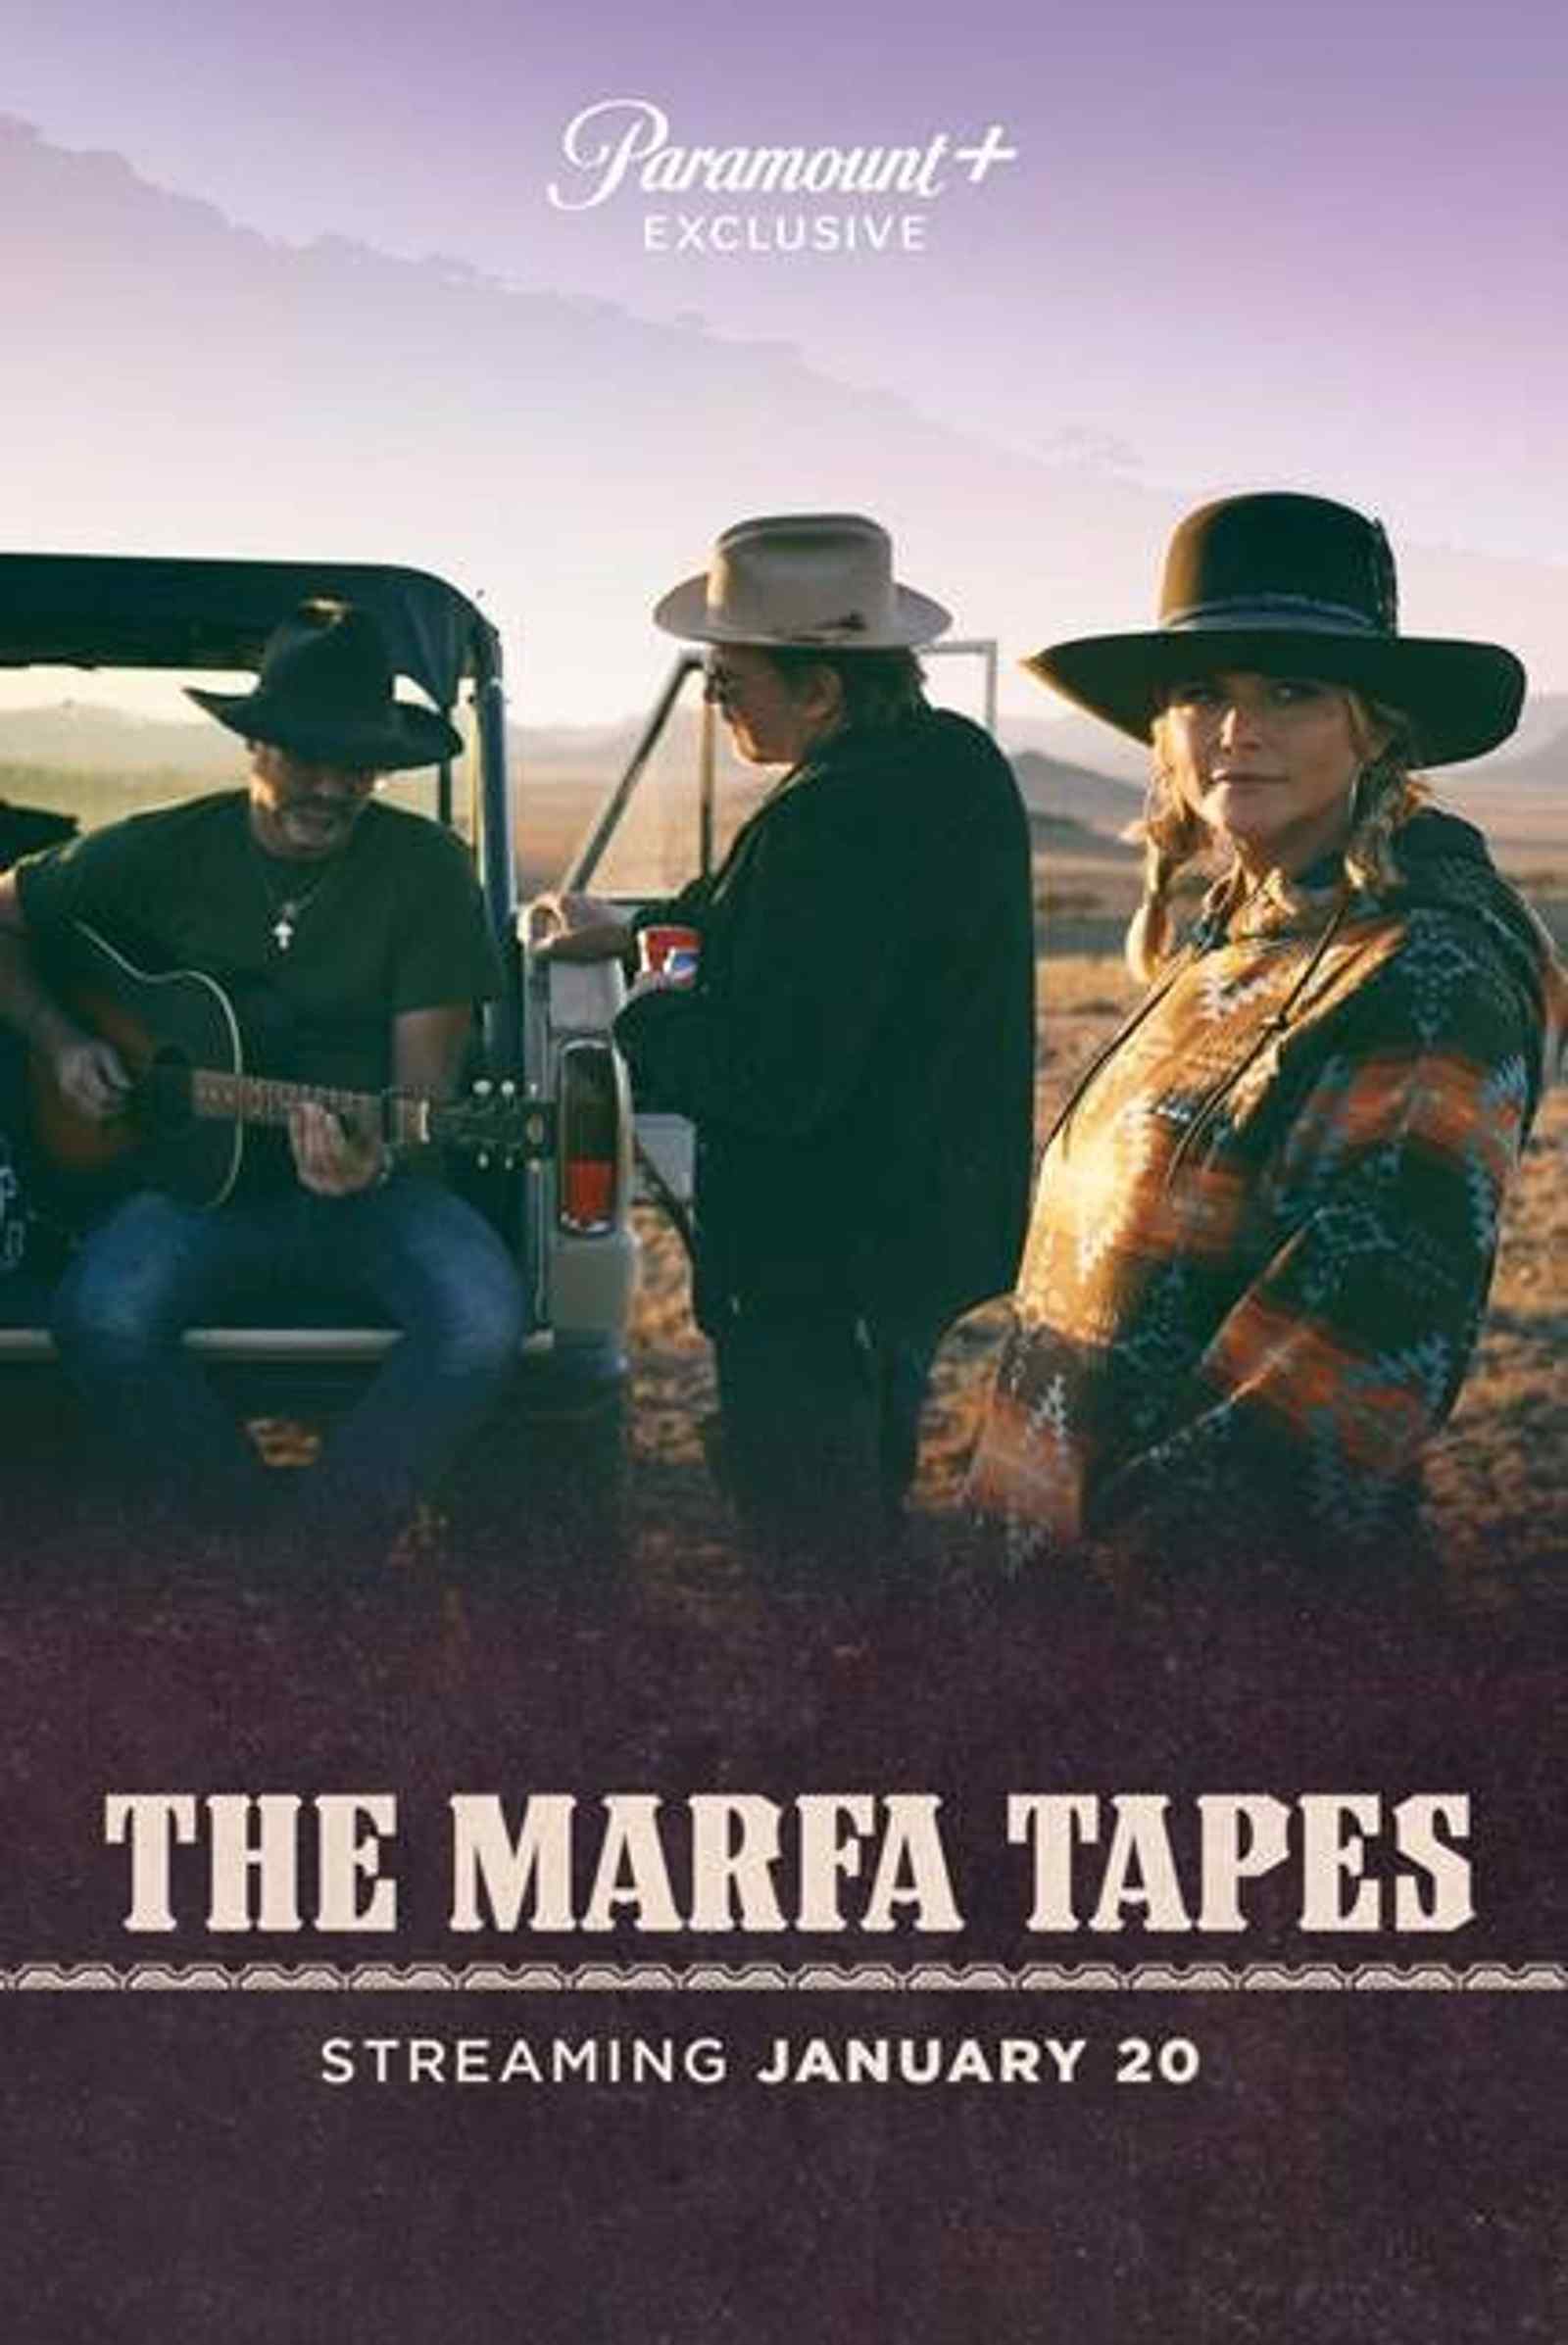 The Marfa Tapes: Miranda Lambert, Jack Ingram and Jon Randall‘s